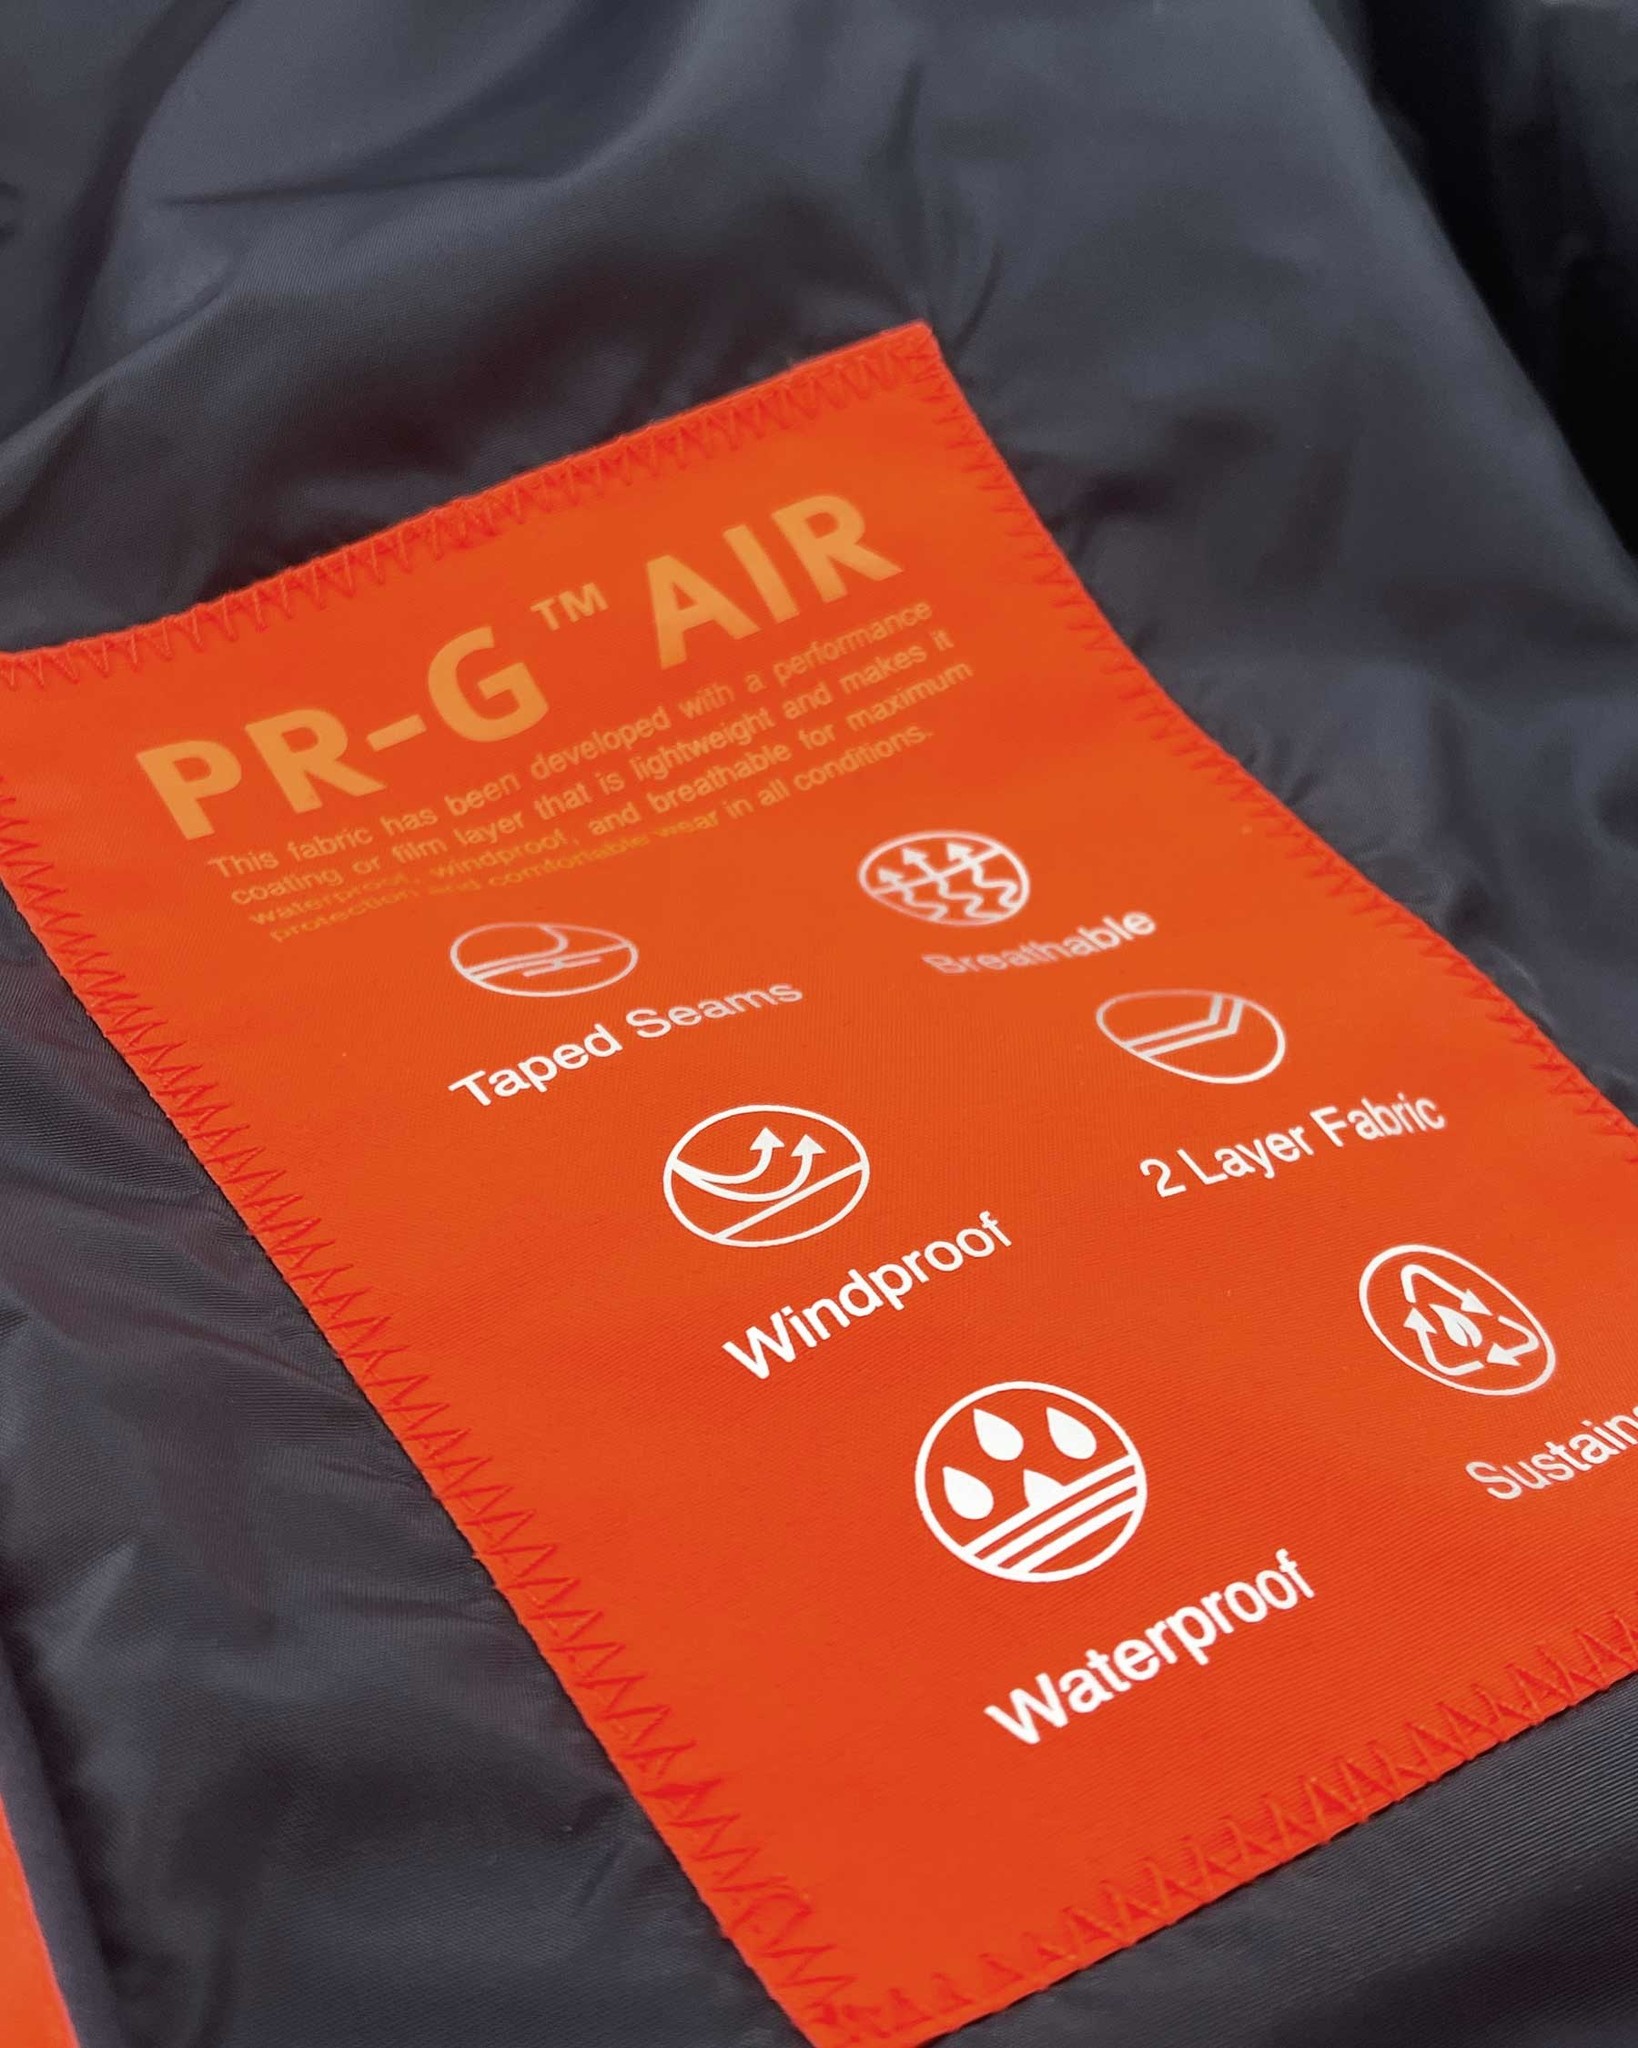 The PR-G™ Air Taffrail trench coat